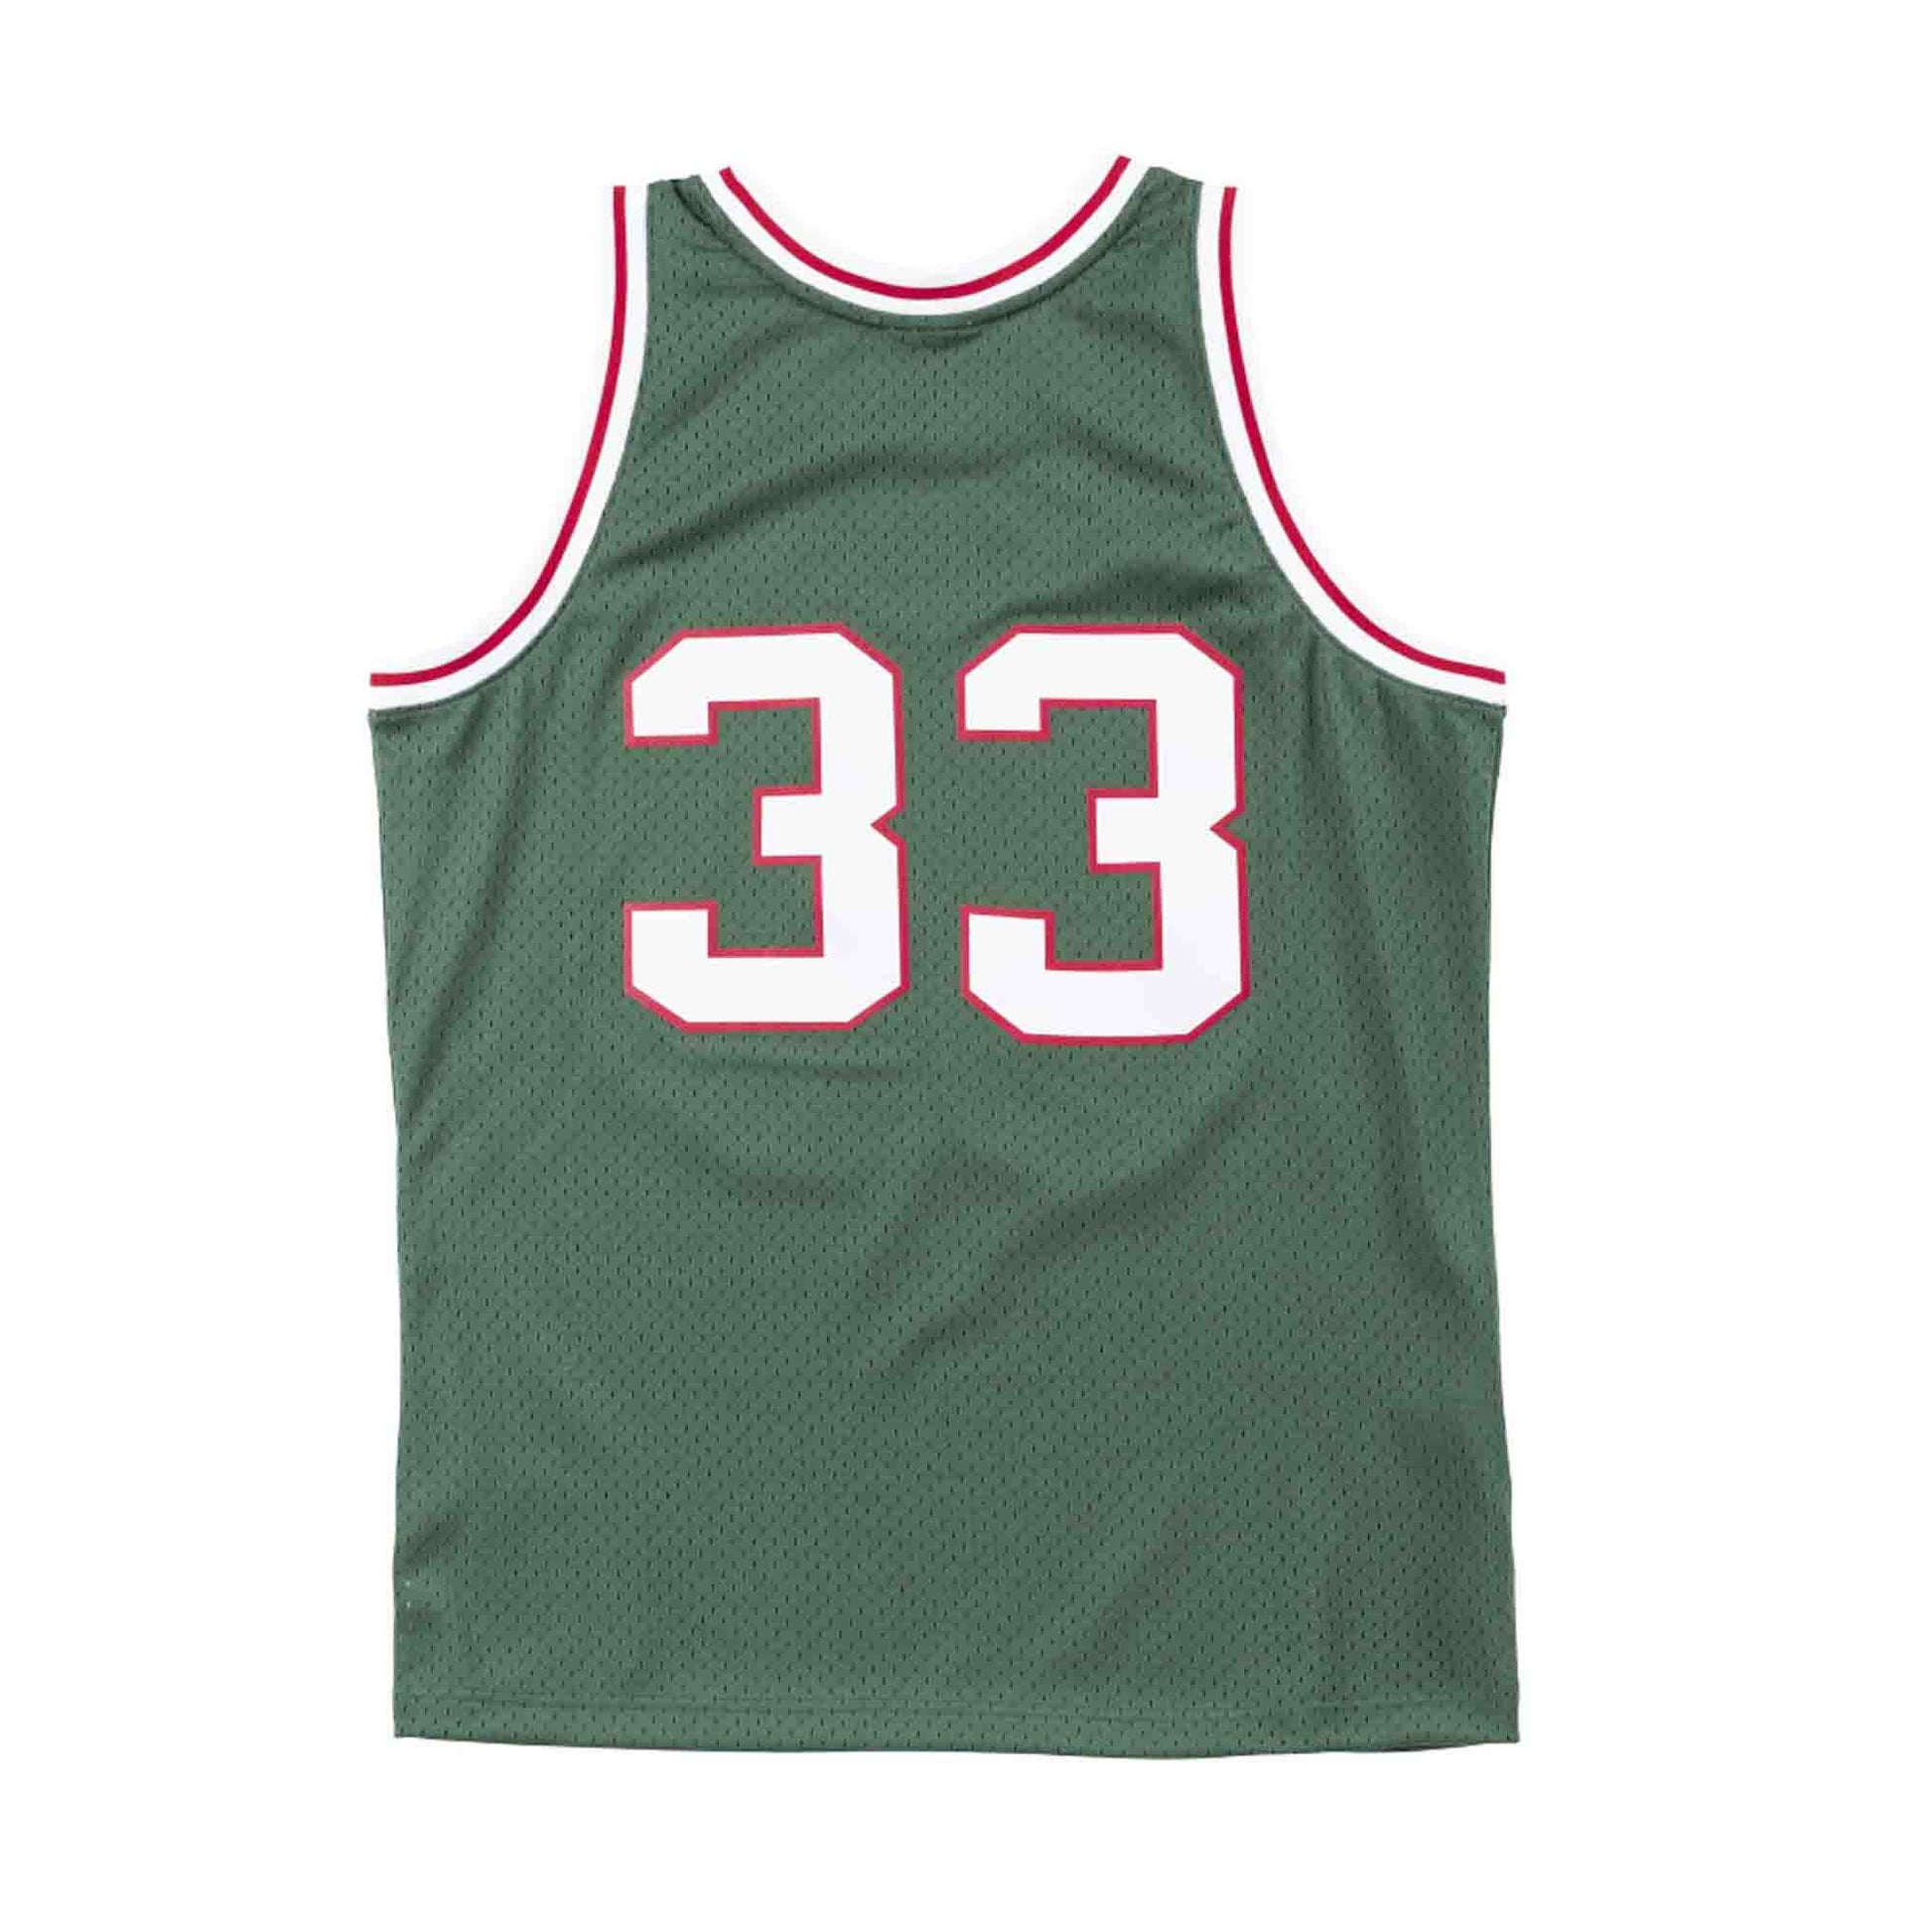  Mitchell & Ness NBA Swingman Alternate Jersey Bucks 96